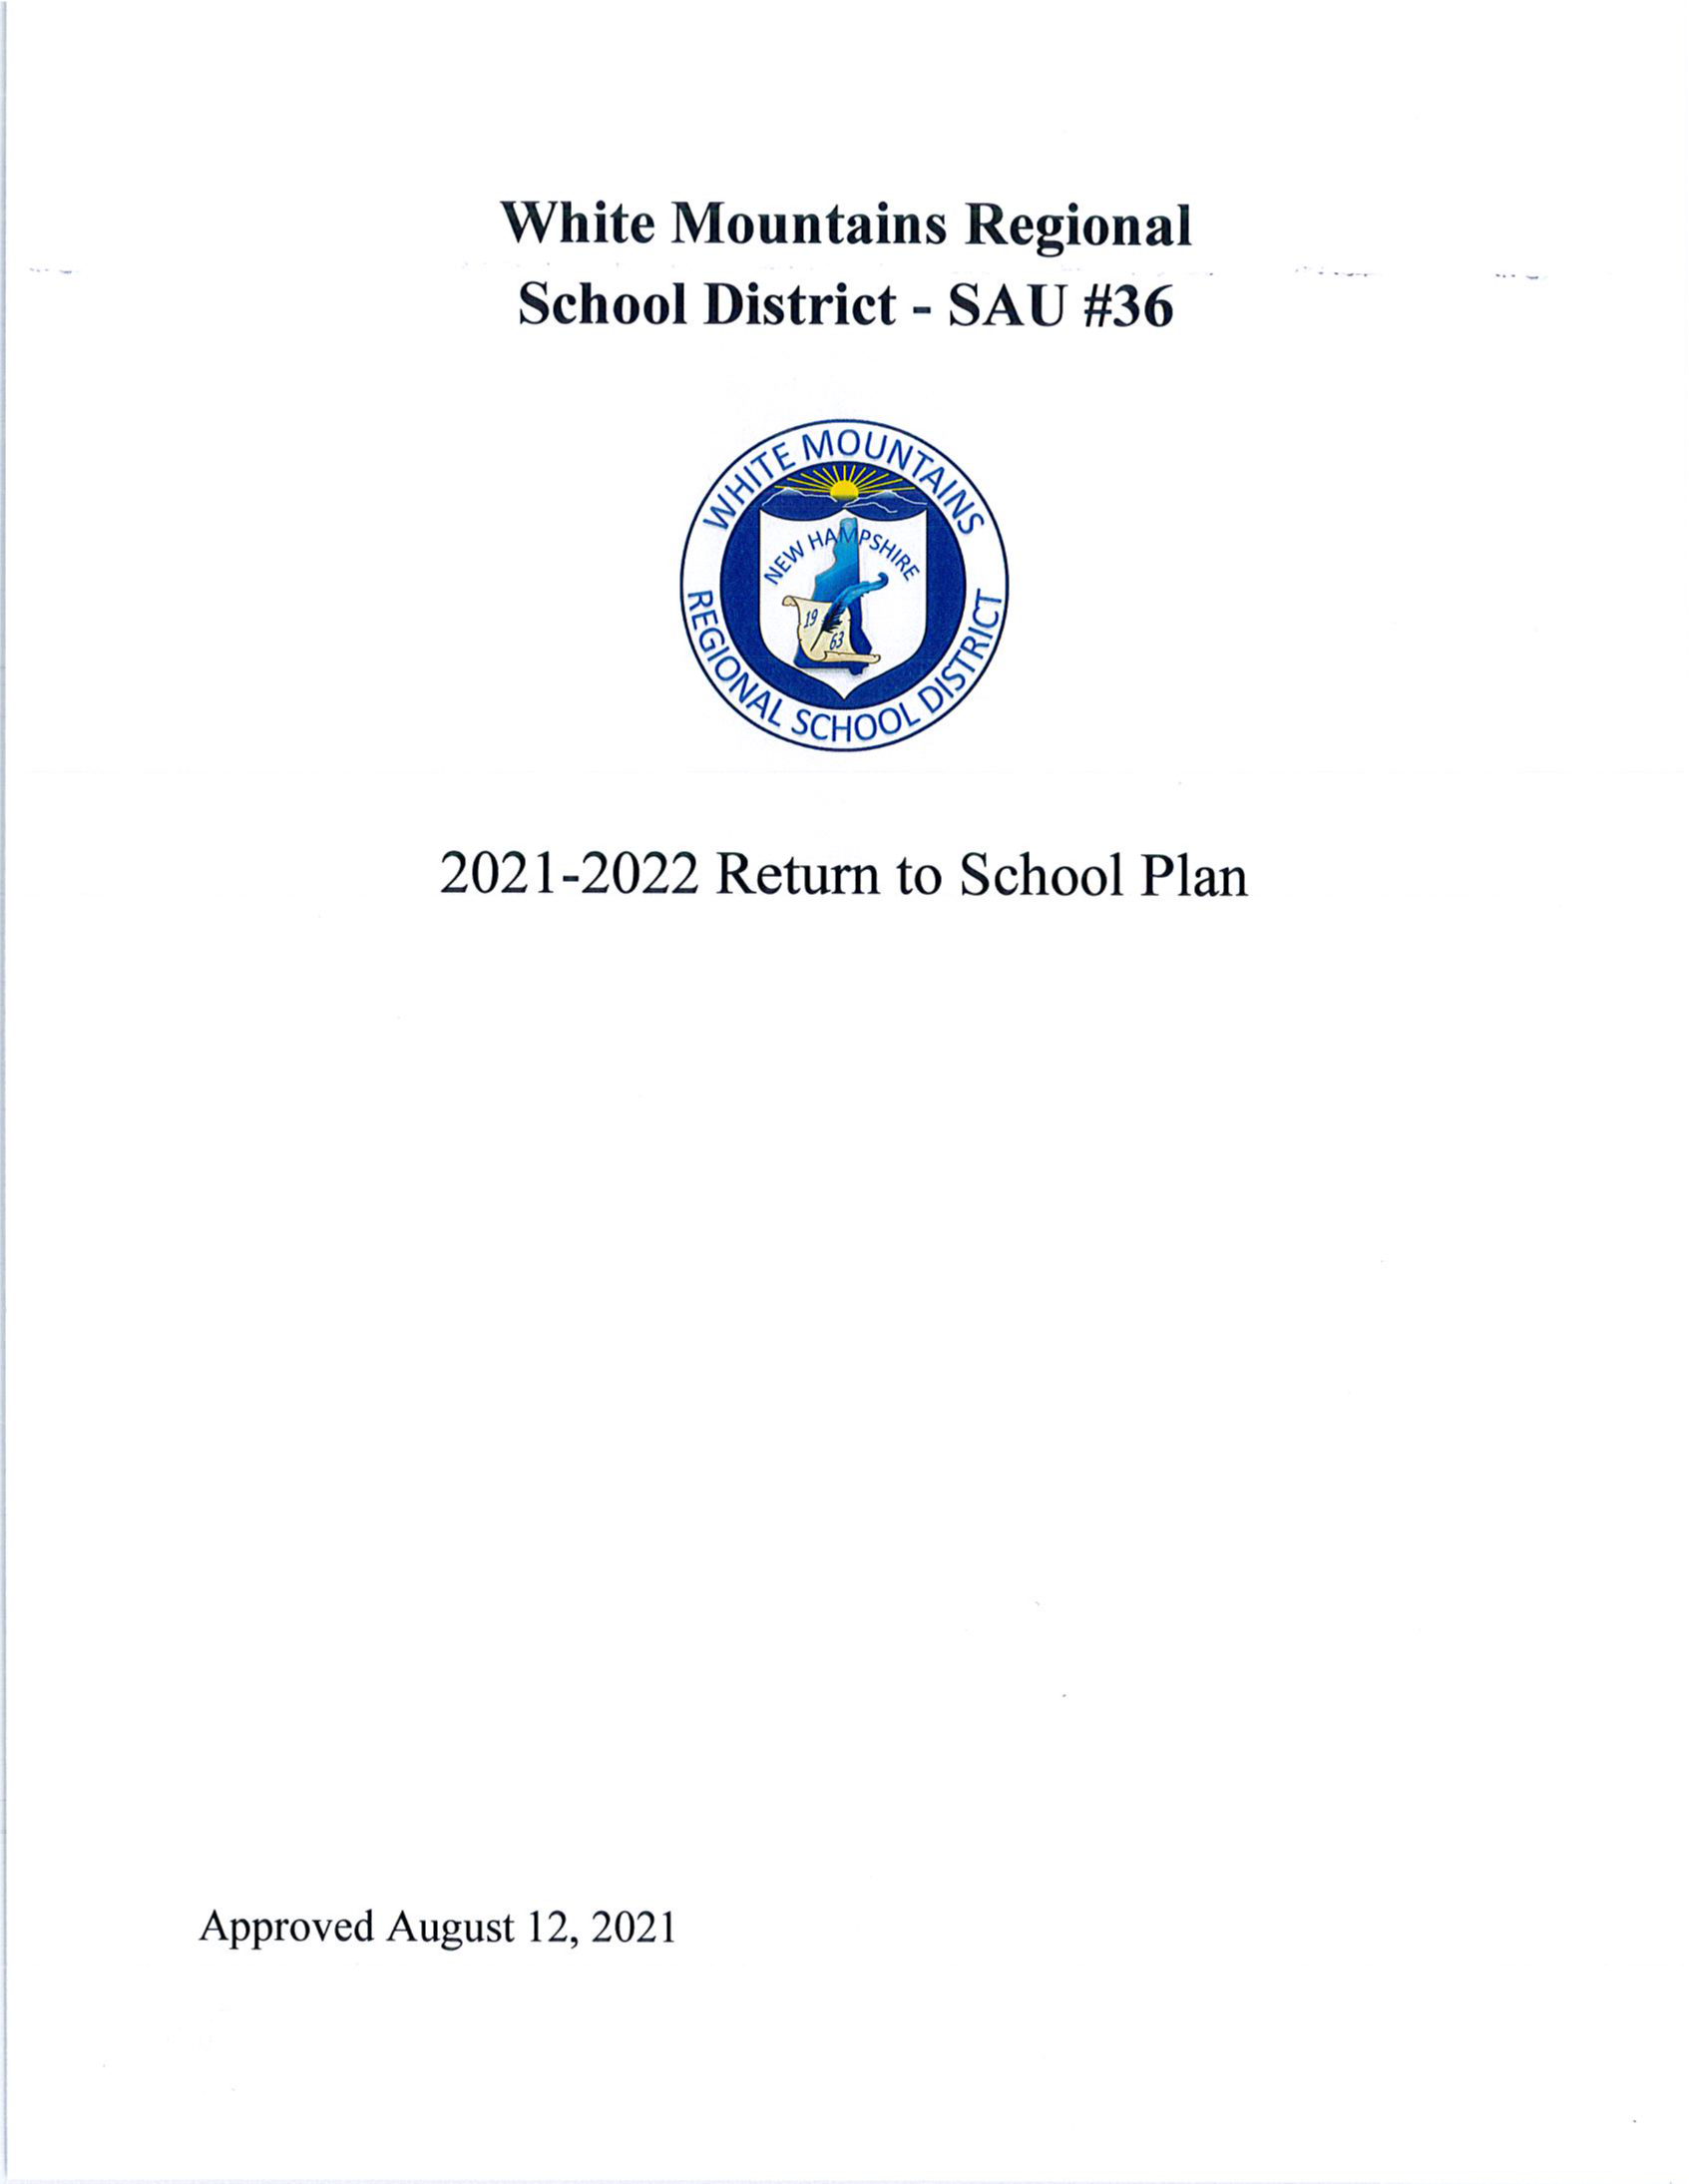 WMRSD SAU 36 2021-2022 Return to School Plan approved August 12, 2021